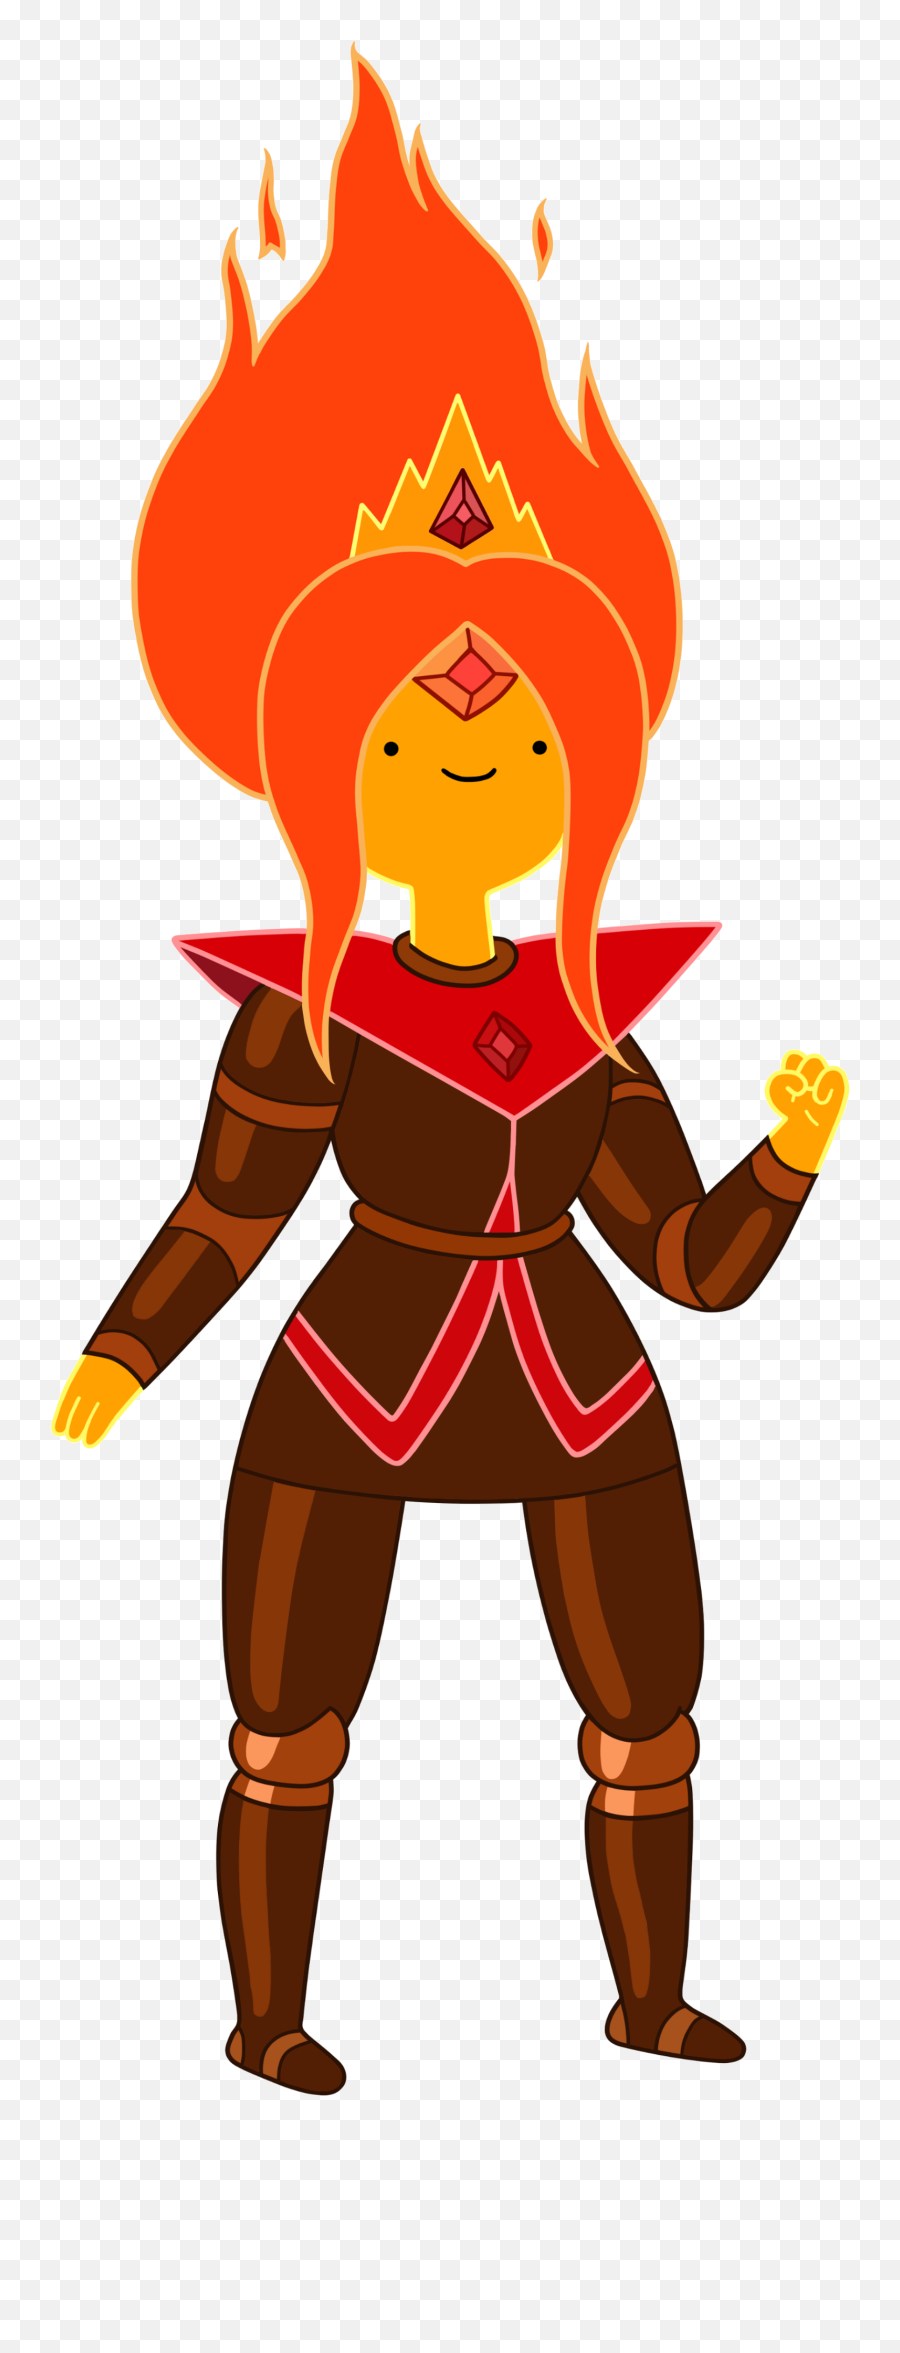 Fire And Heat Pantheon - Flame Princess Adventure Time Emoji,Orange Setsuna Emotion